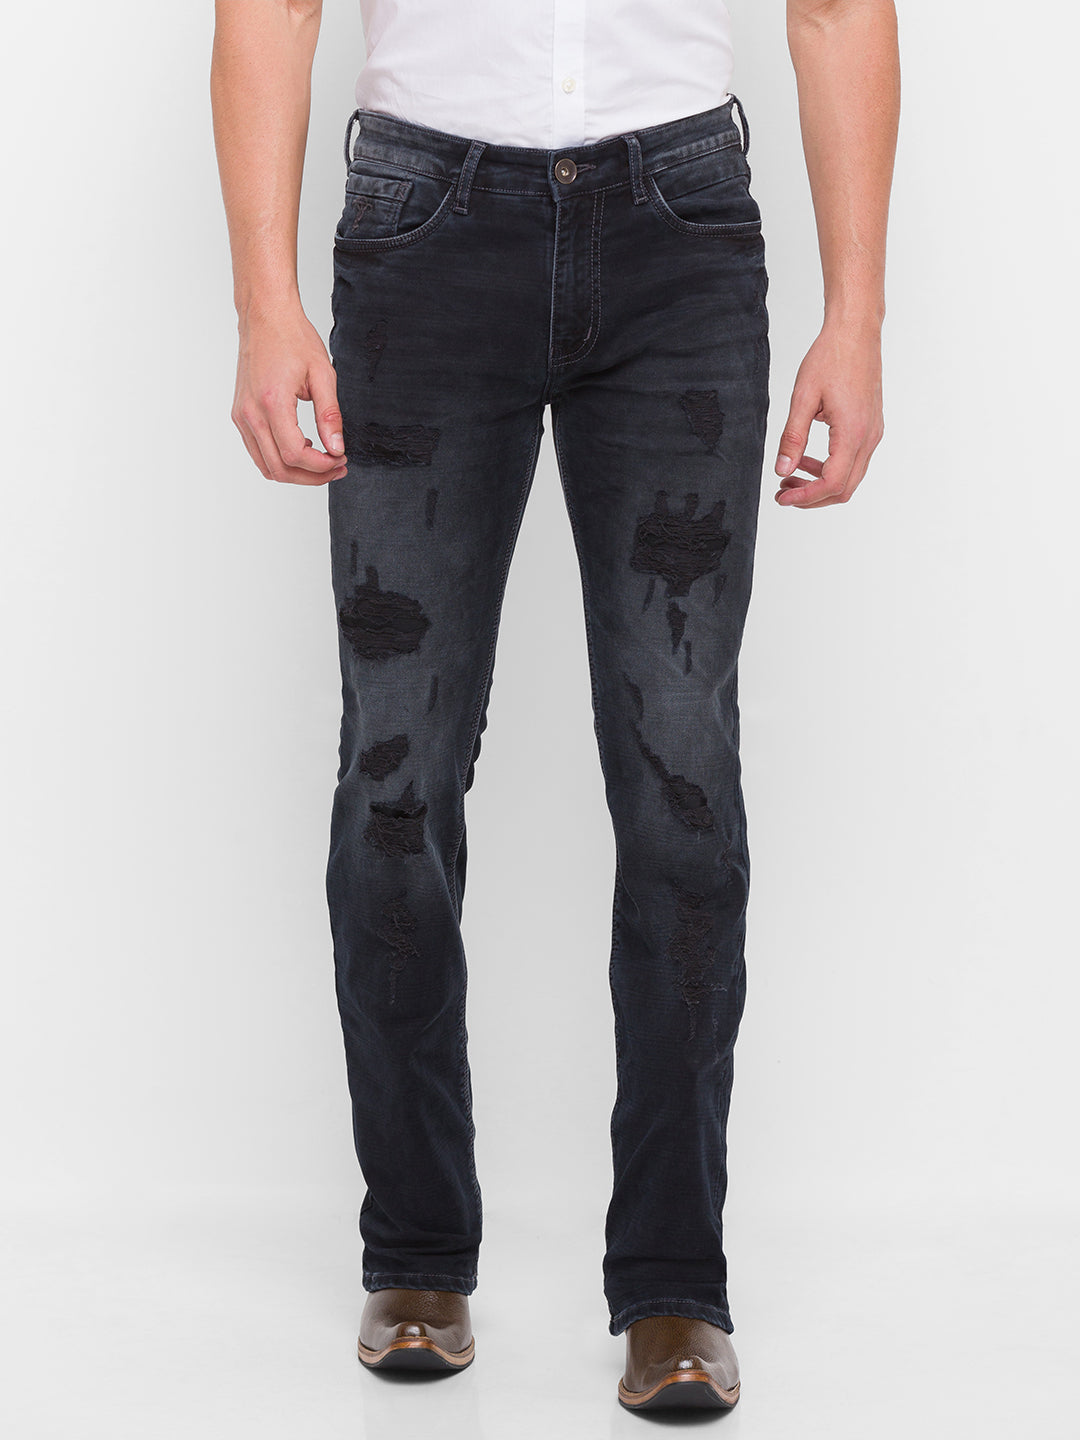 SikSilk Men's Black Washed Essential Distressed Skinny Jean